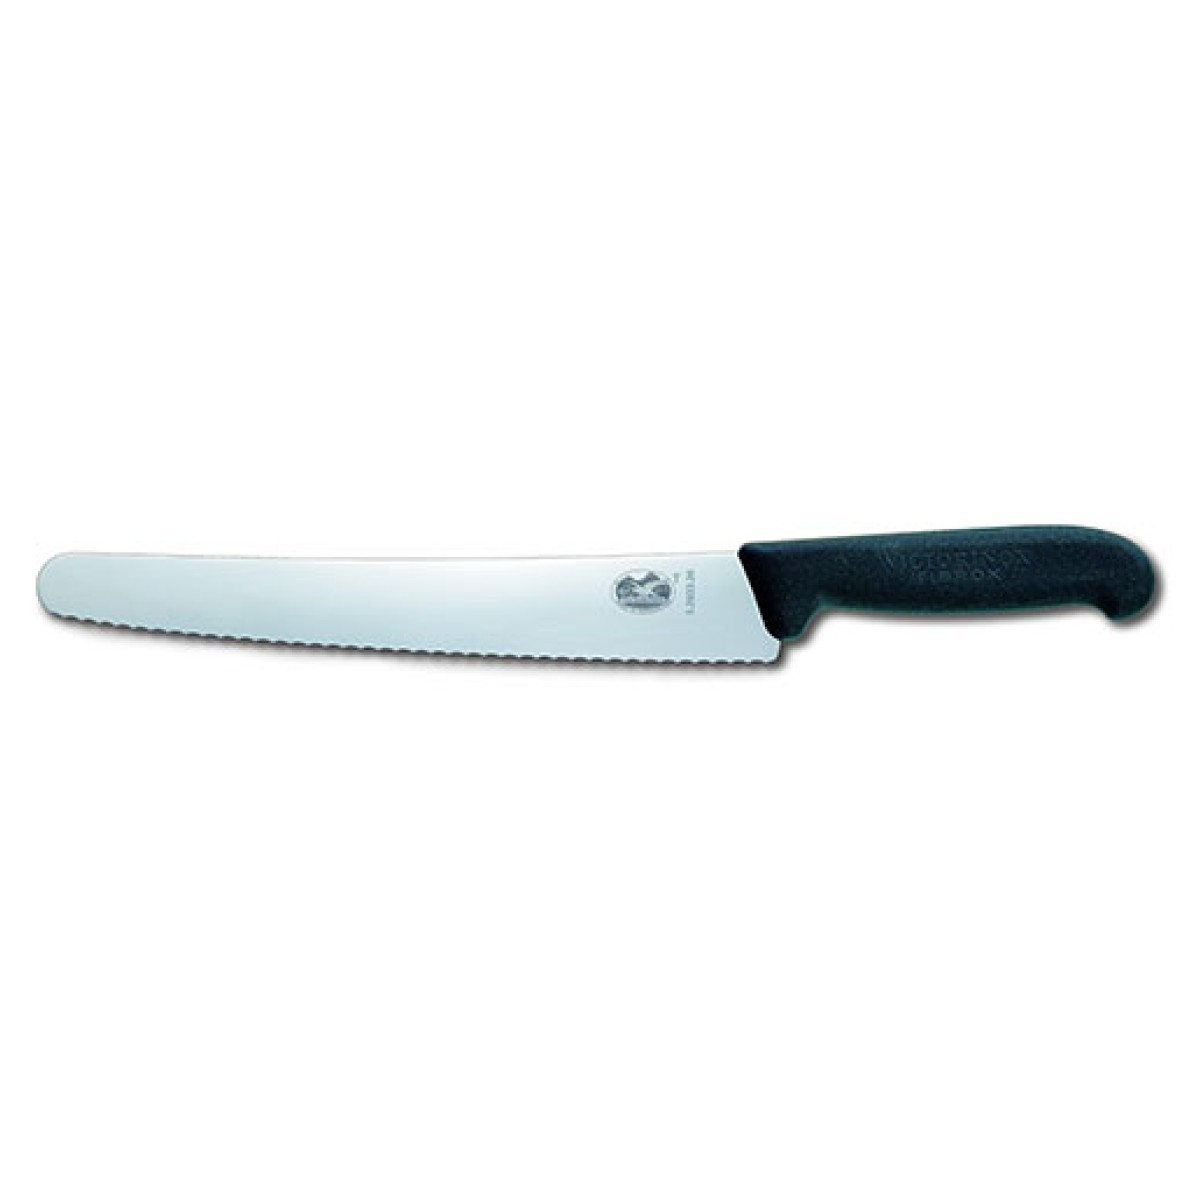 KNIFE VICTORINOX PASTRY 52933-26 NYLON